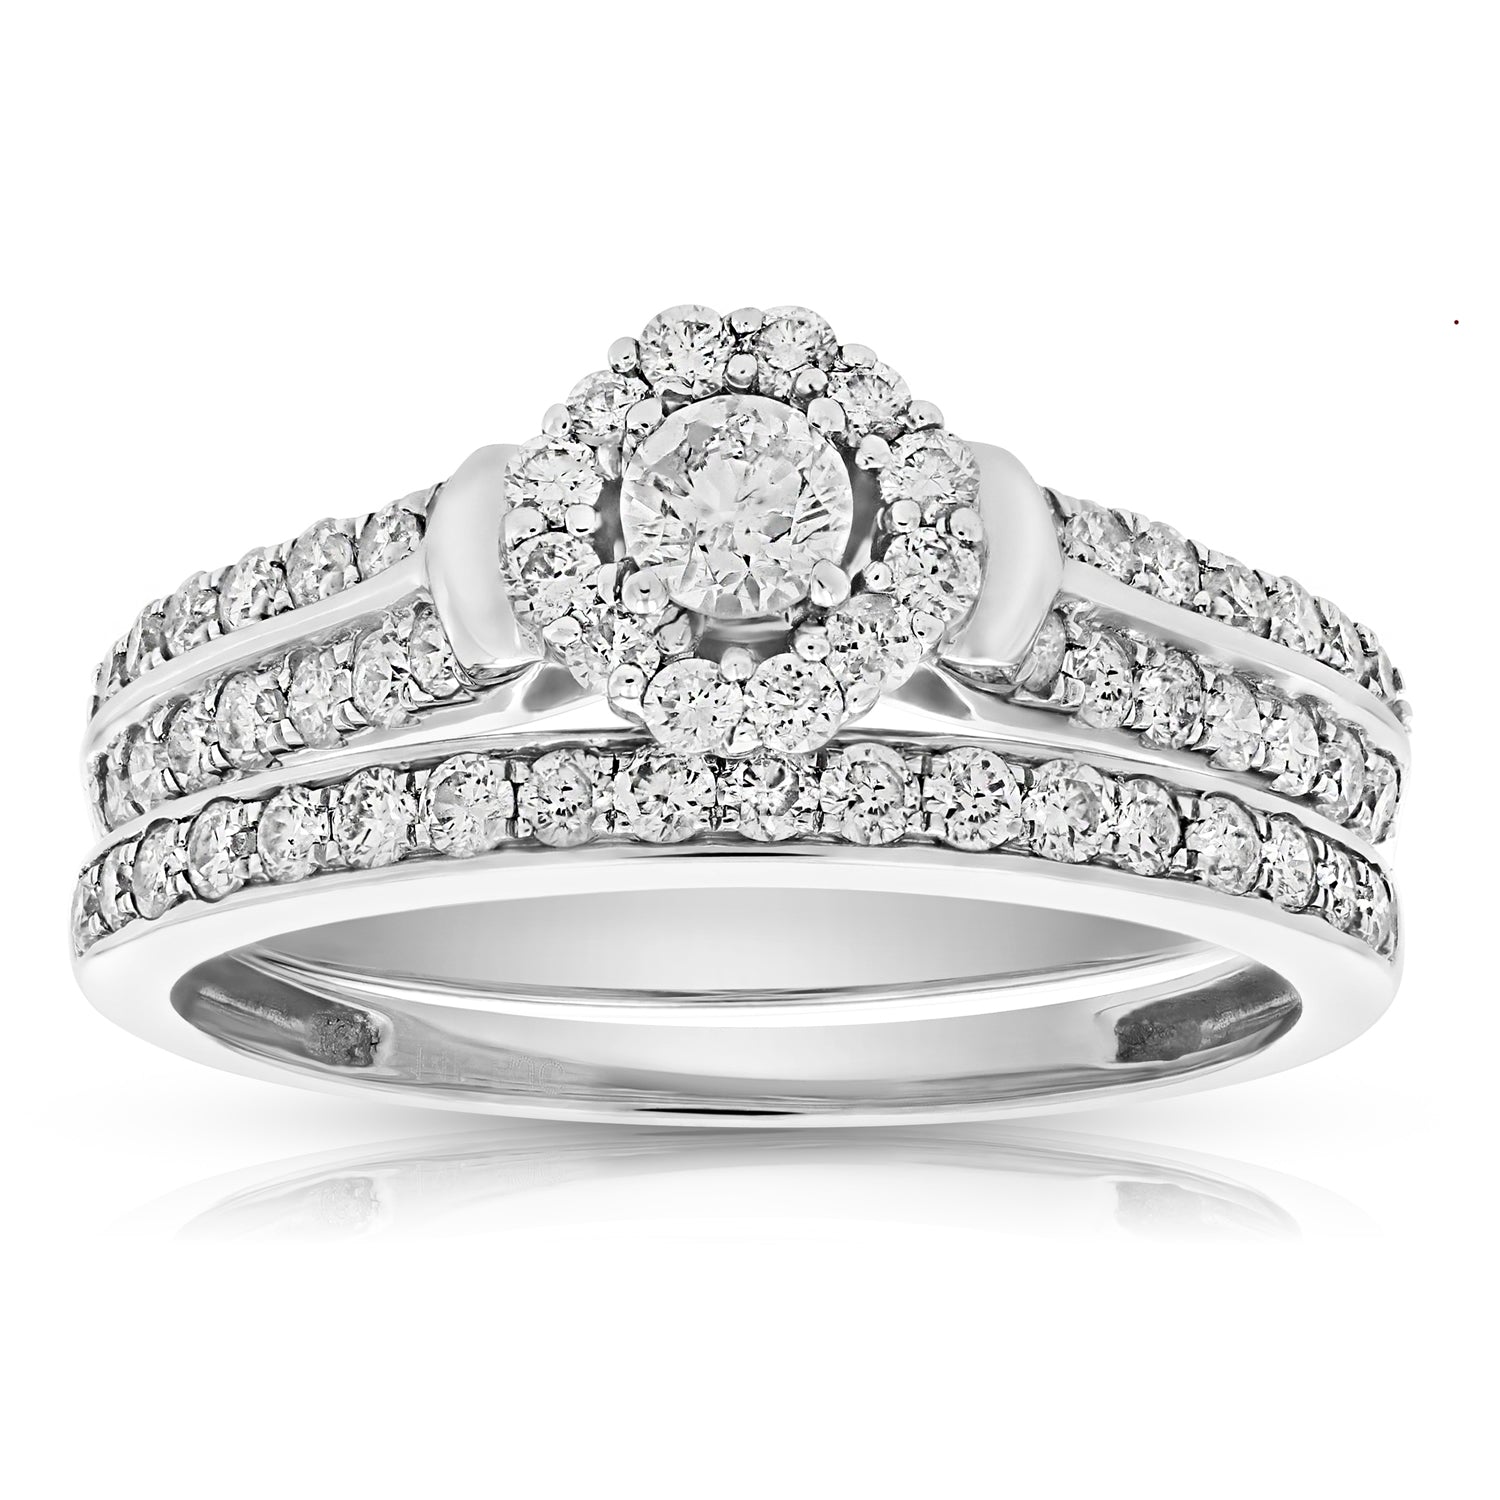 1 cttw Diamond Halo Cluster Wedding Engagement Ring Set 14K White Gold Bridal